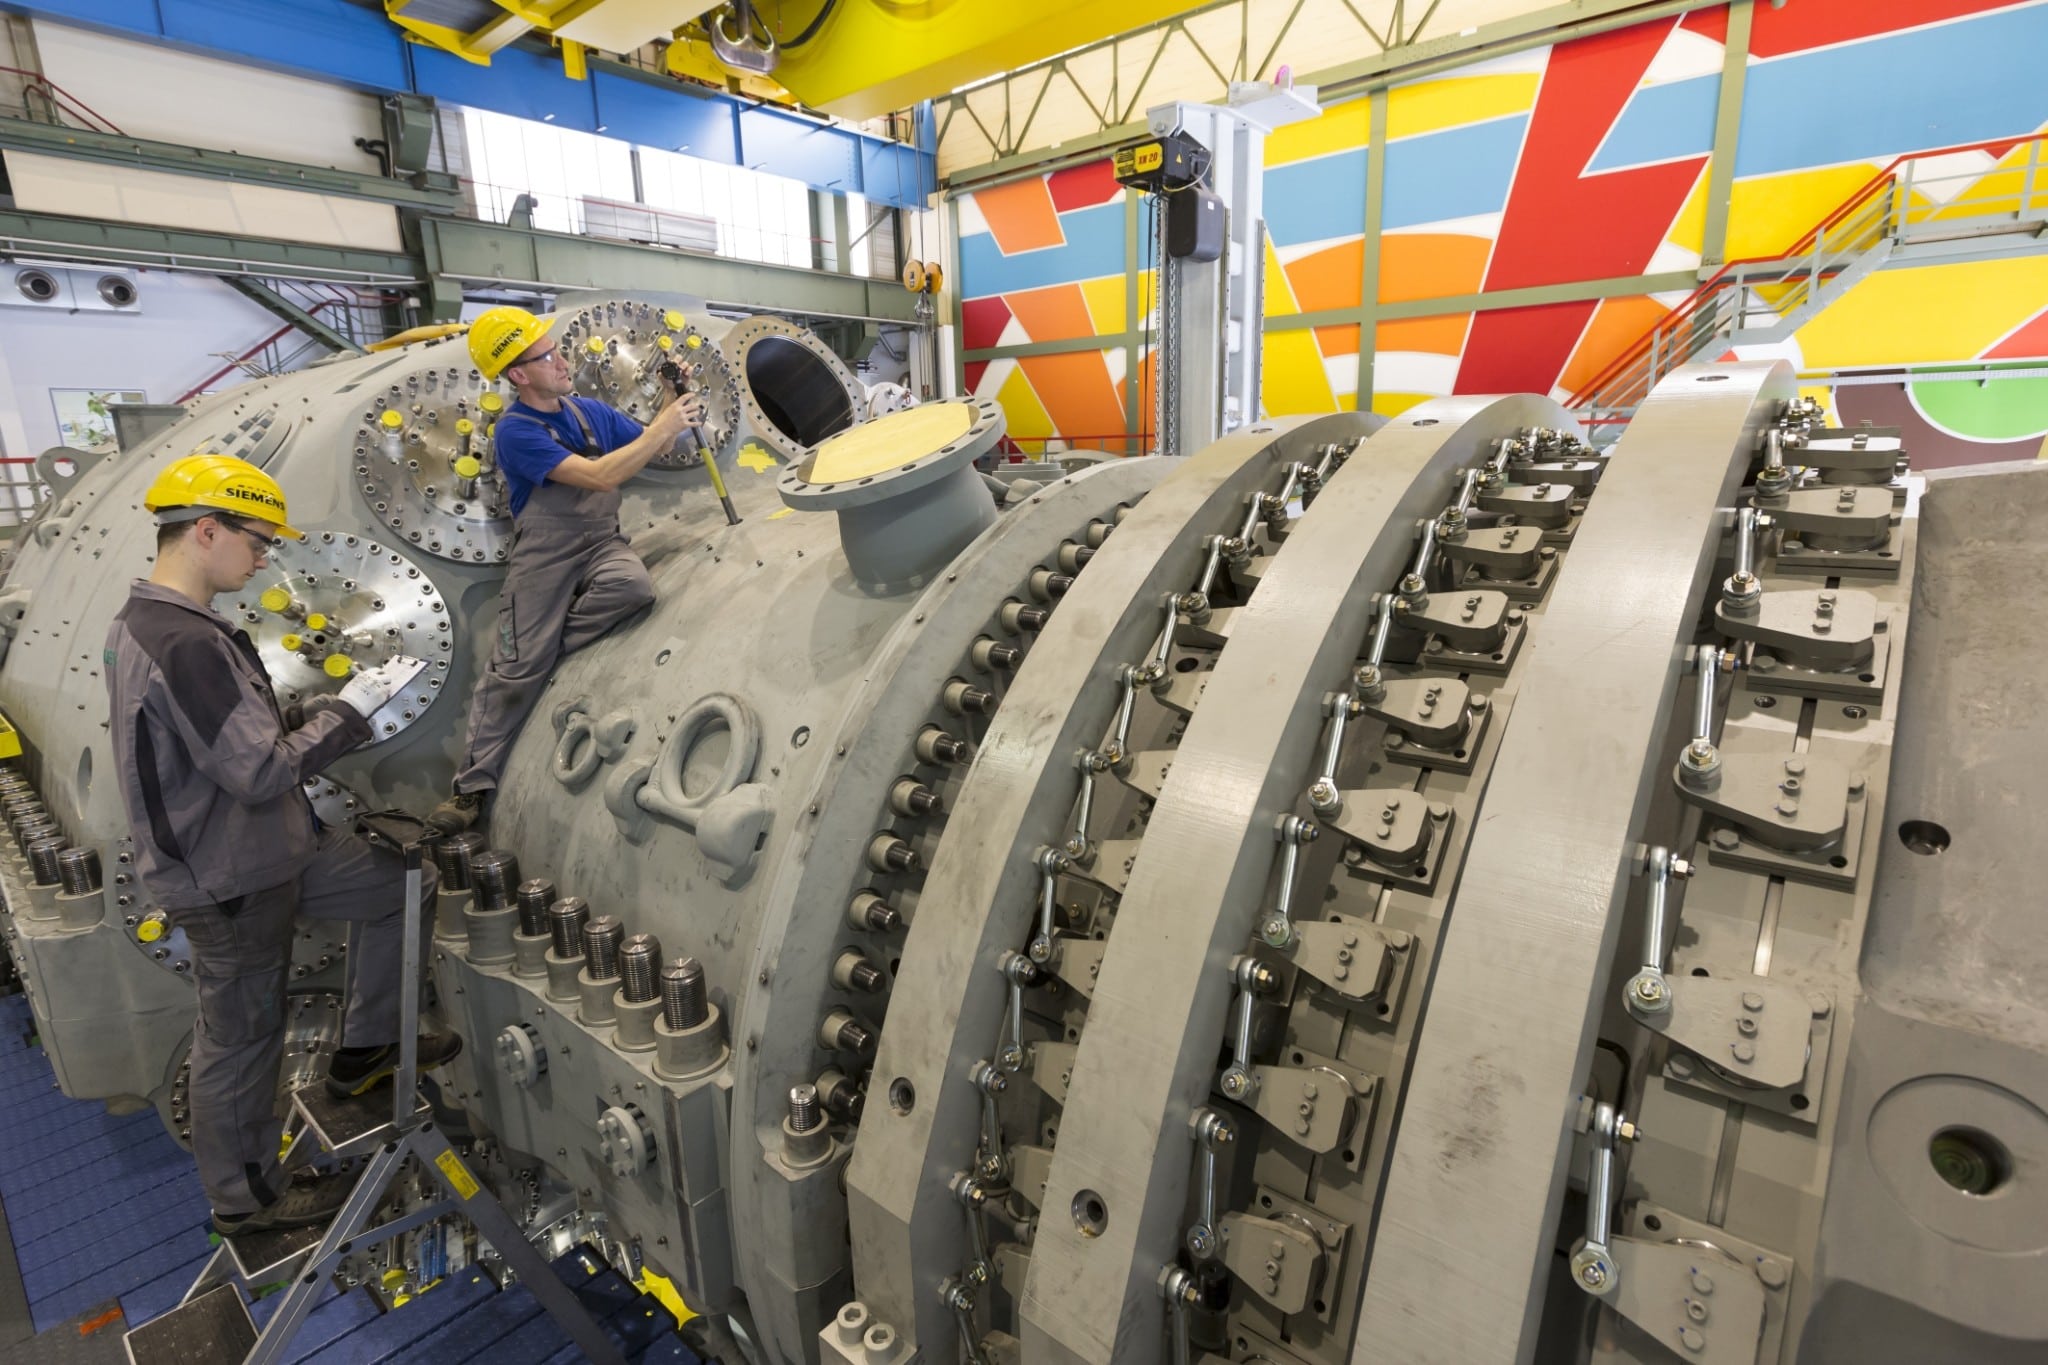 Historic and Trend-Setting Siemens Turbine Manufacturing Plant Hits Milestone